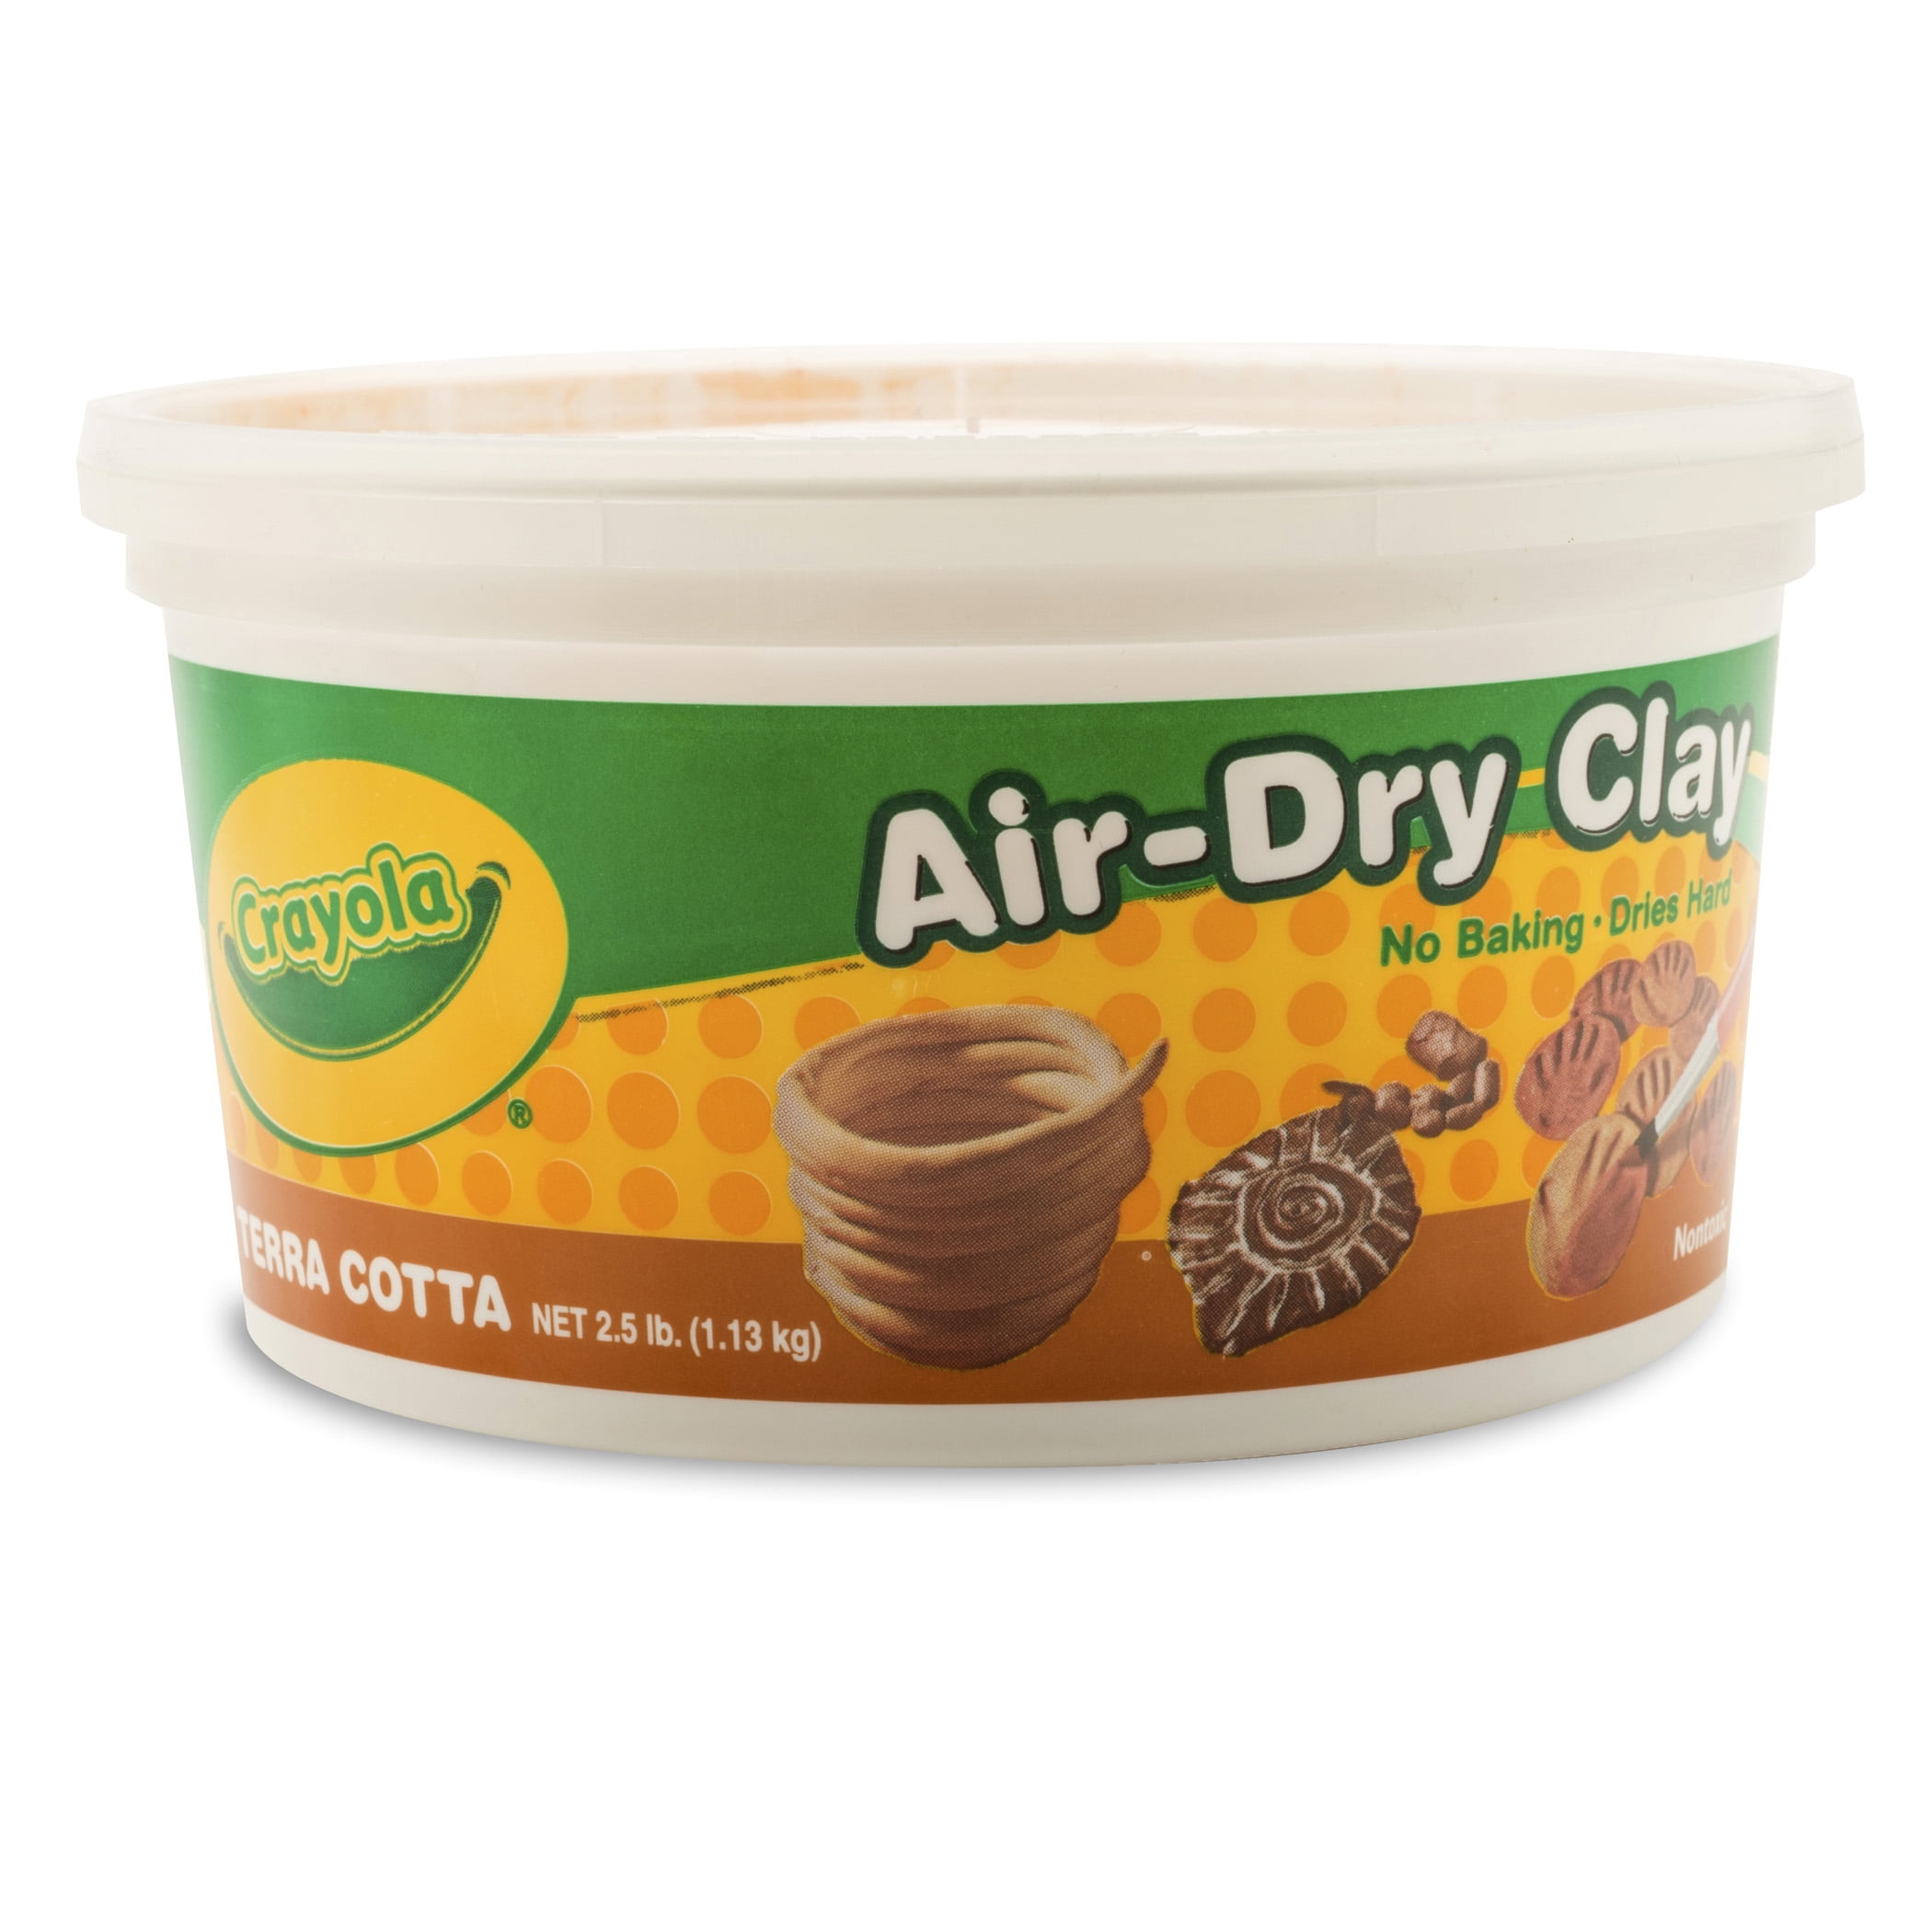 Crayola® Terra Cotta Air-Dry Clay